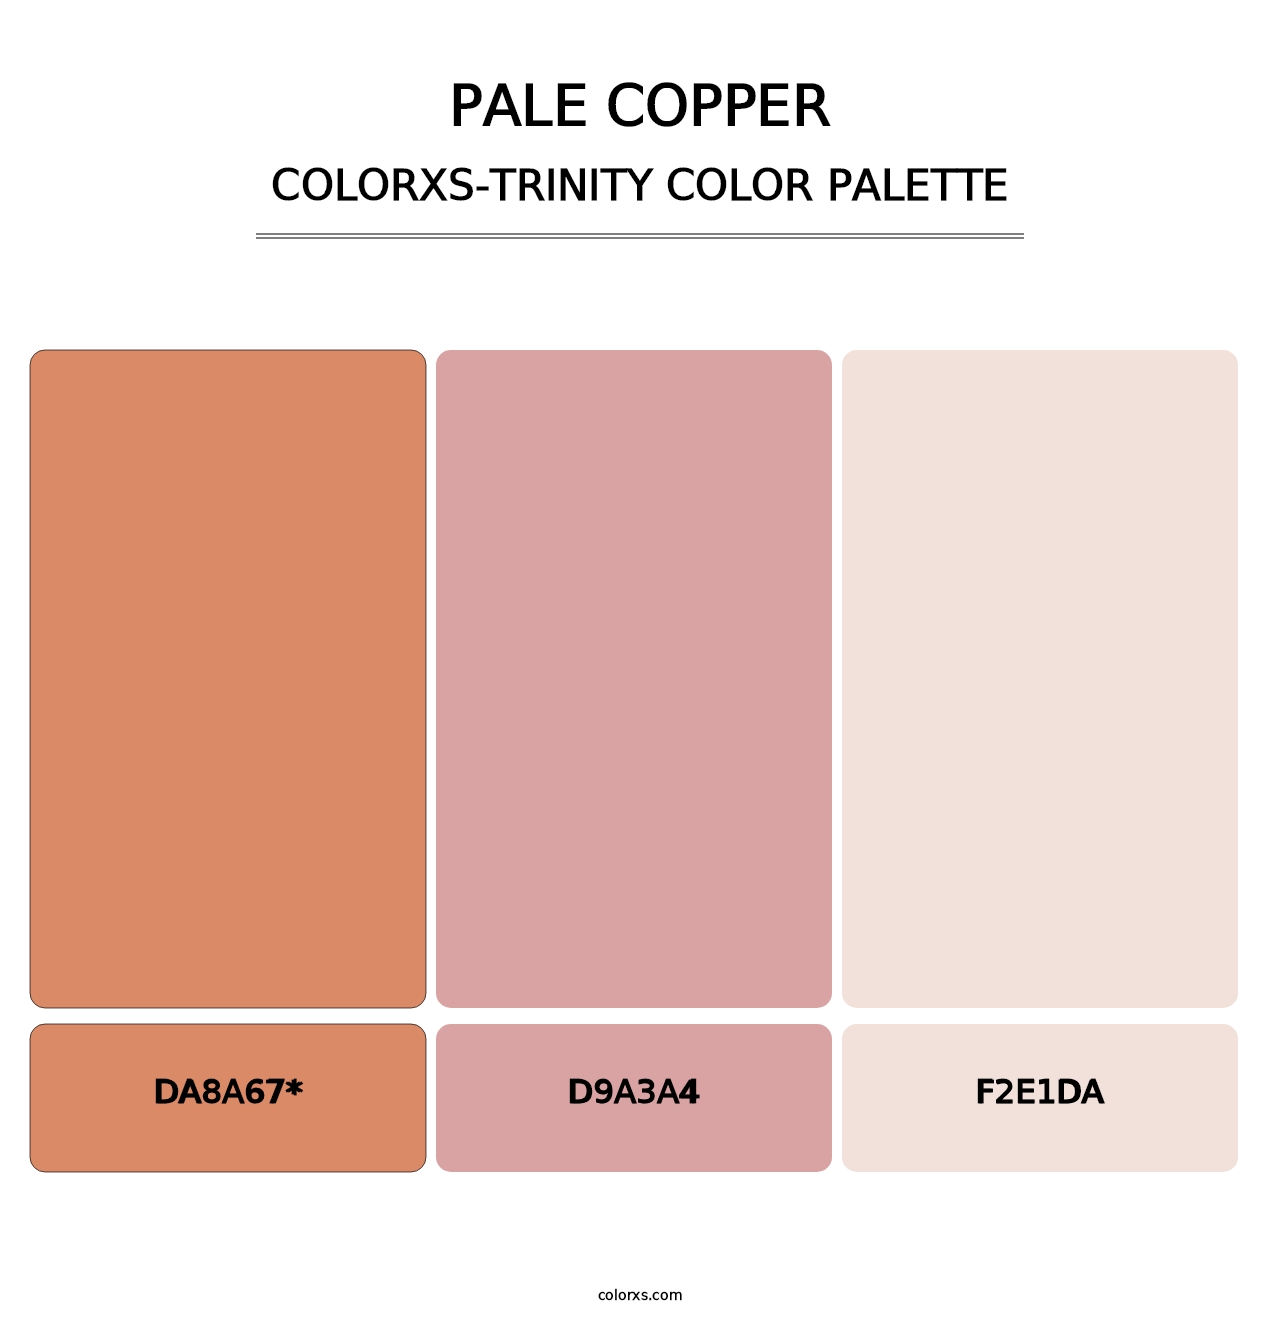 Pale Copper - Colorxs Trinity Palette